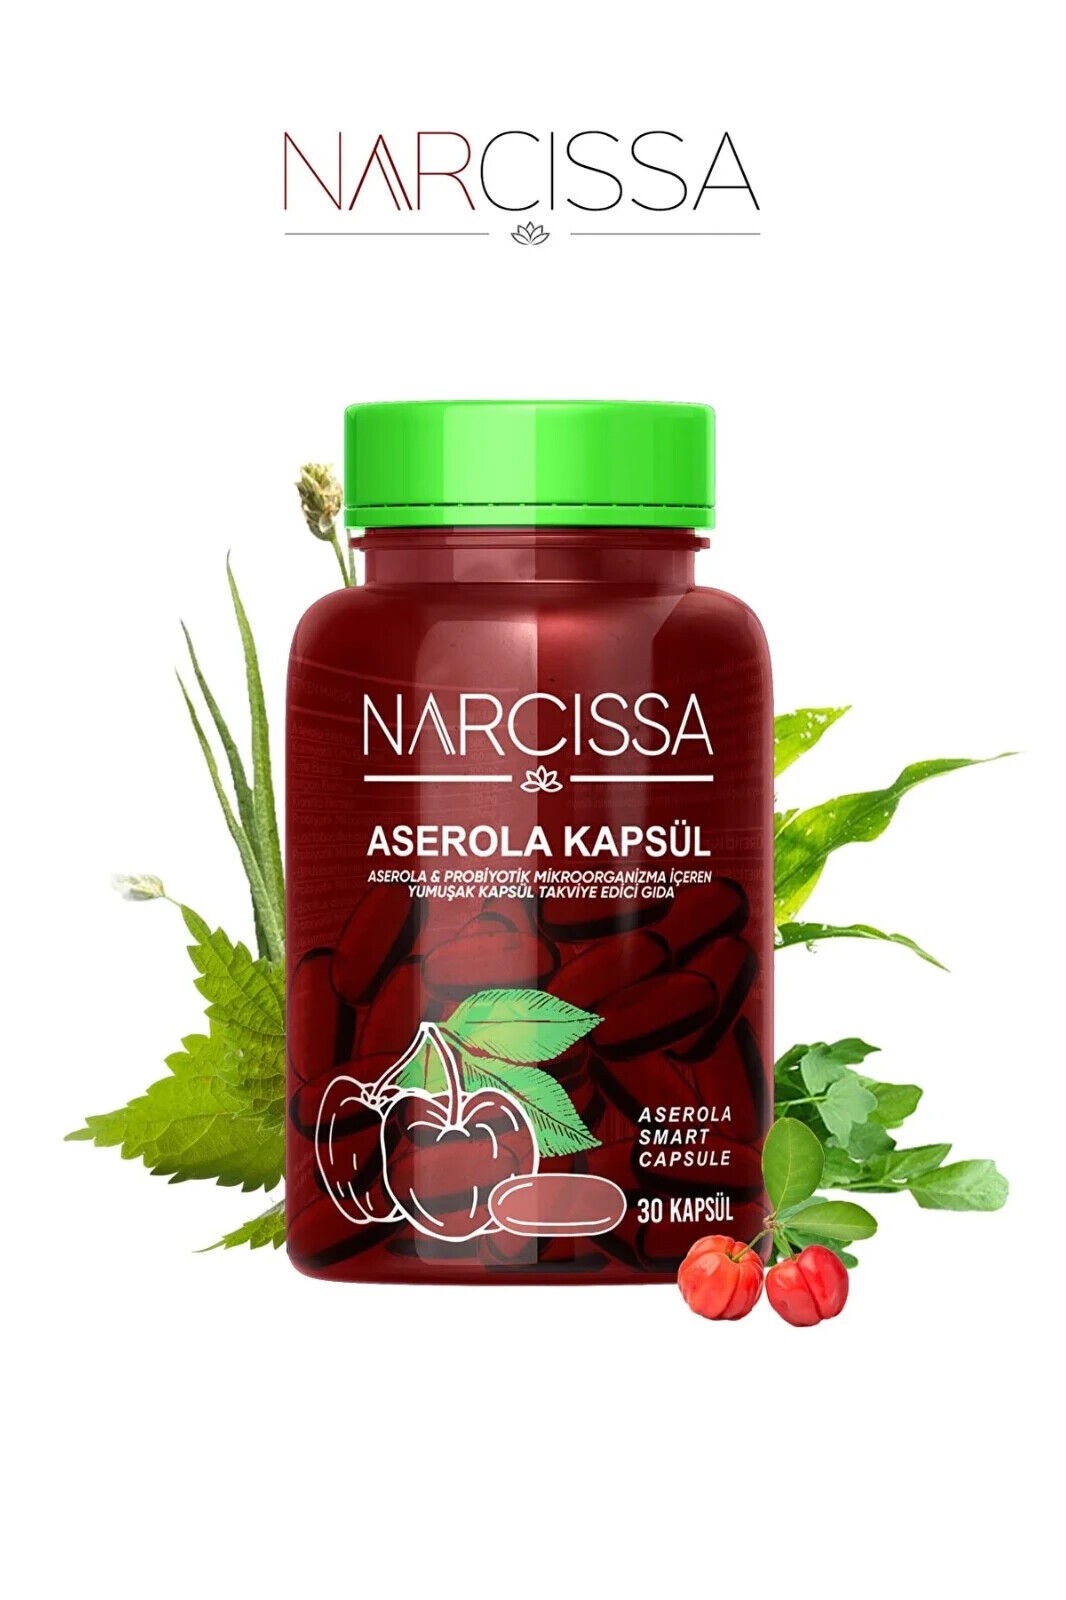 Narcissa Aserola Kapseln mit Acerola Extrakt kann beim Abnehmen unterstützen